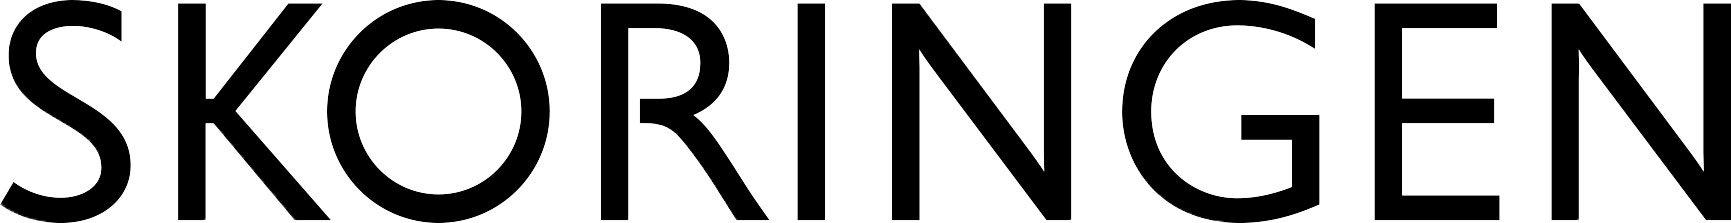 Skoringen logo